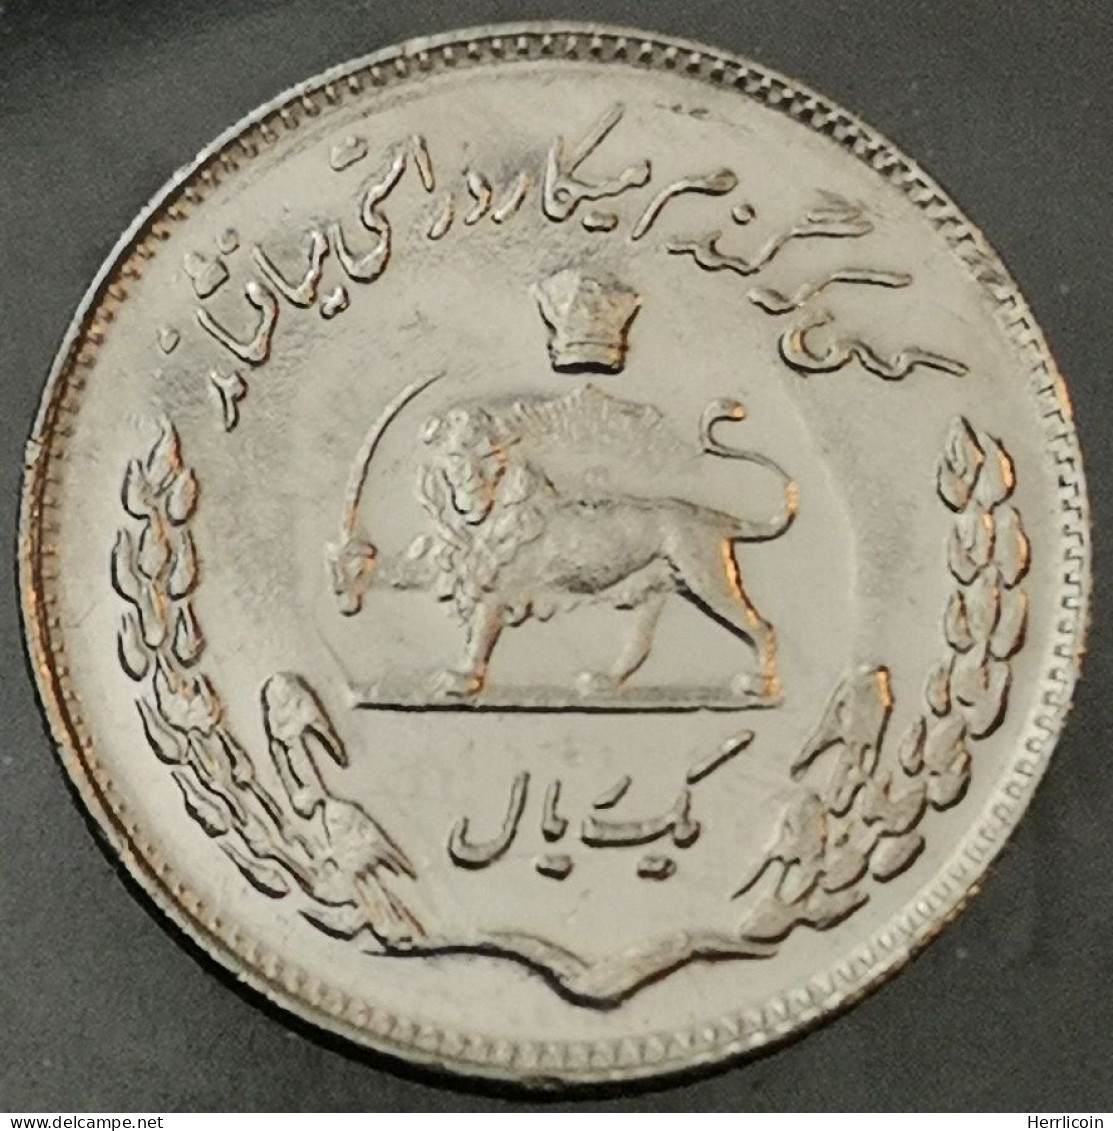 Monnaie Iran - 1971 - 1 Rial - Muhammad Reza Pahlavi - Iran